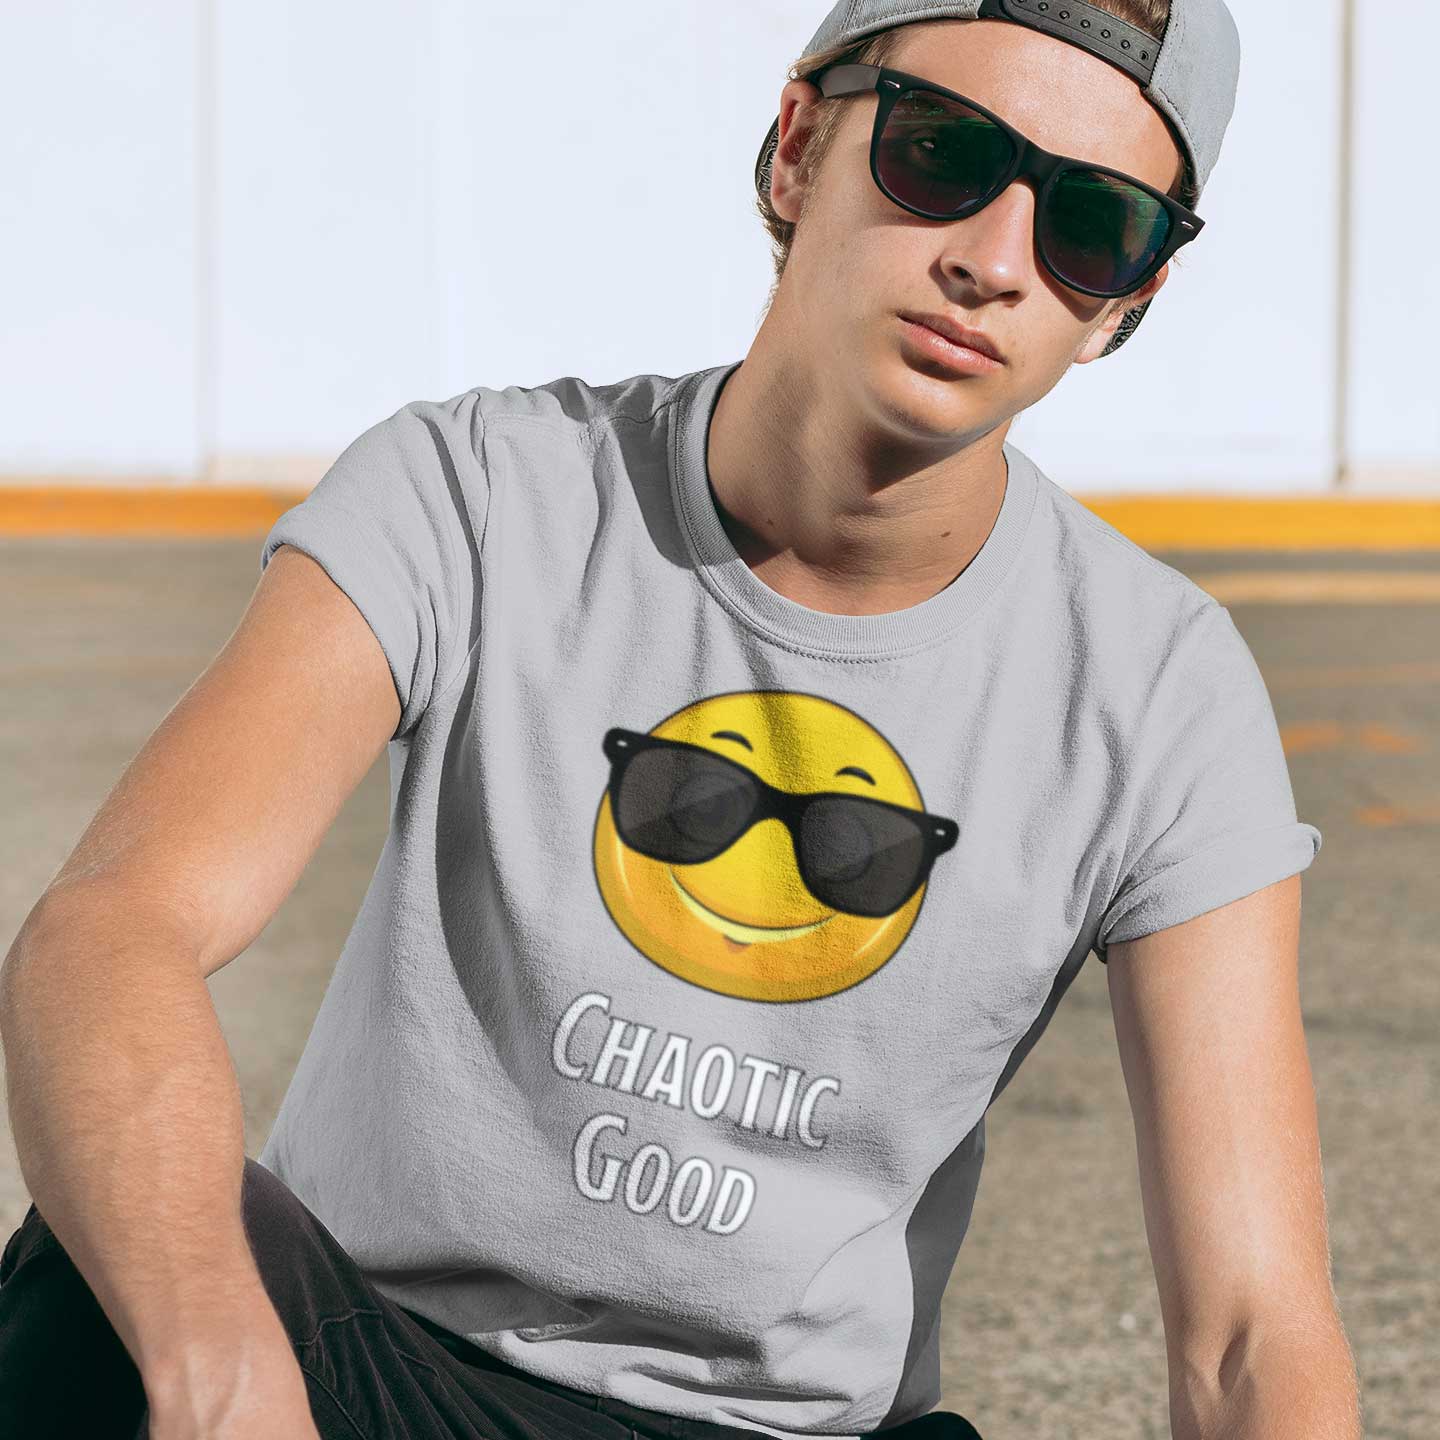 sunglasses emoji shirt